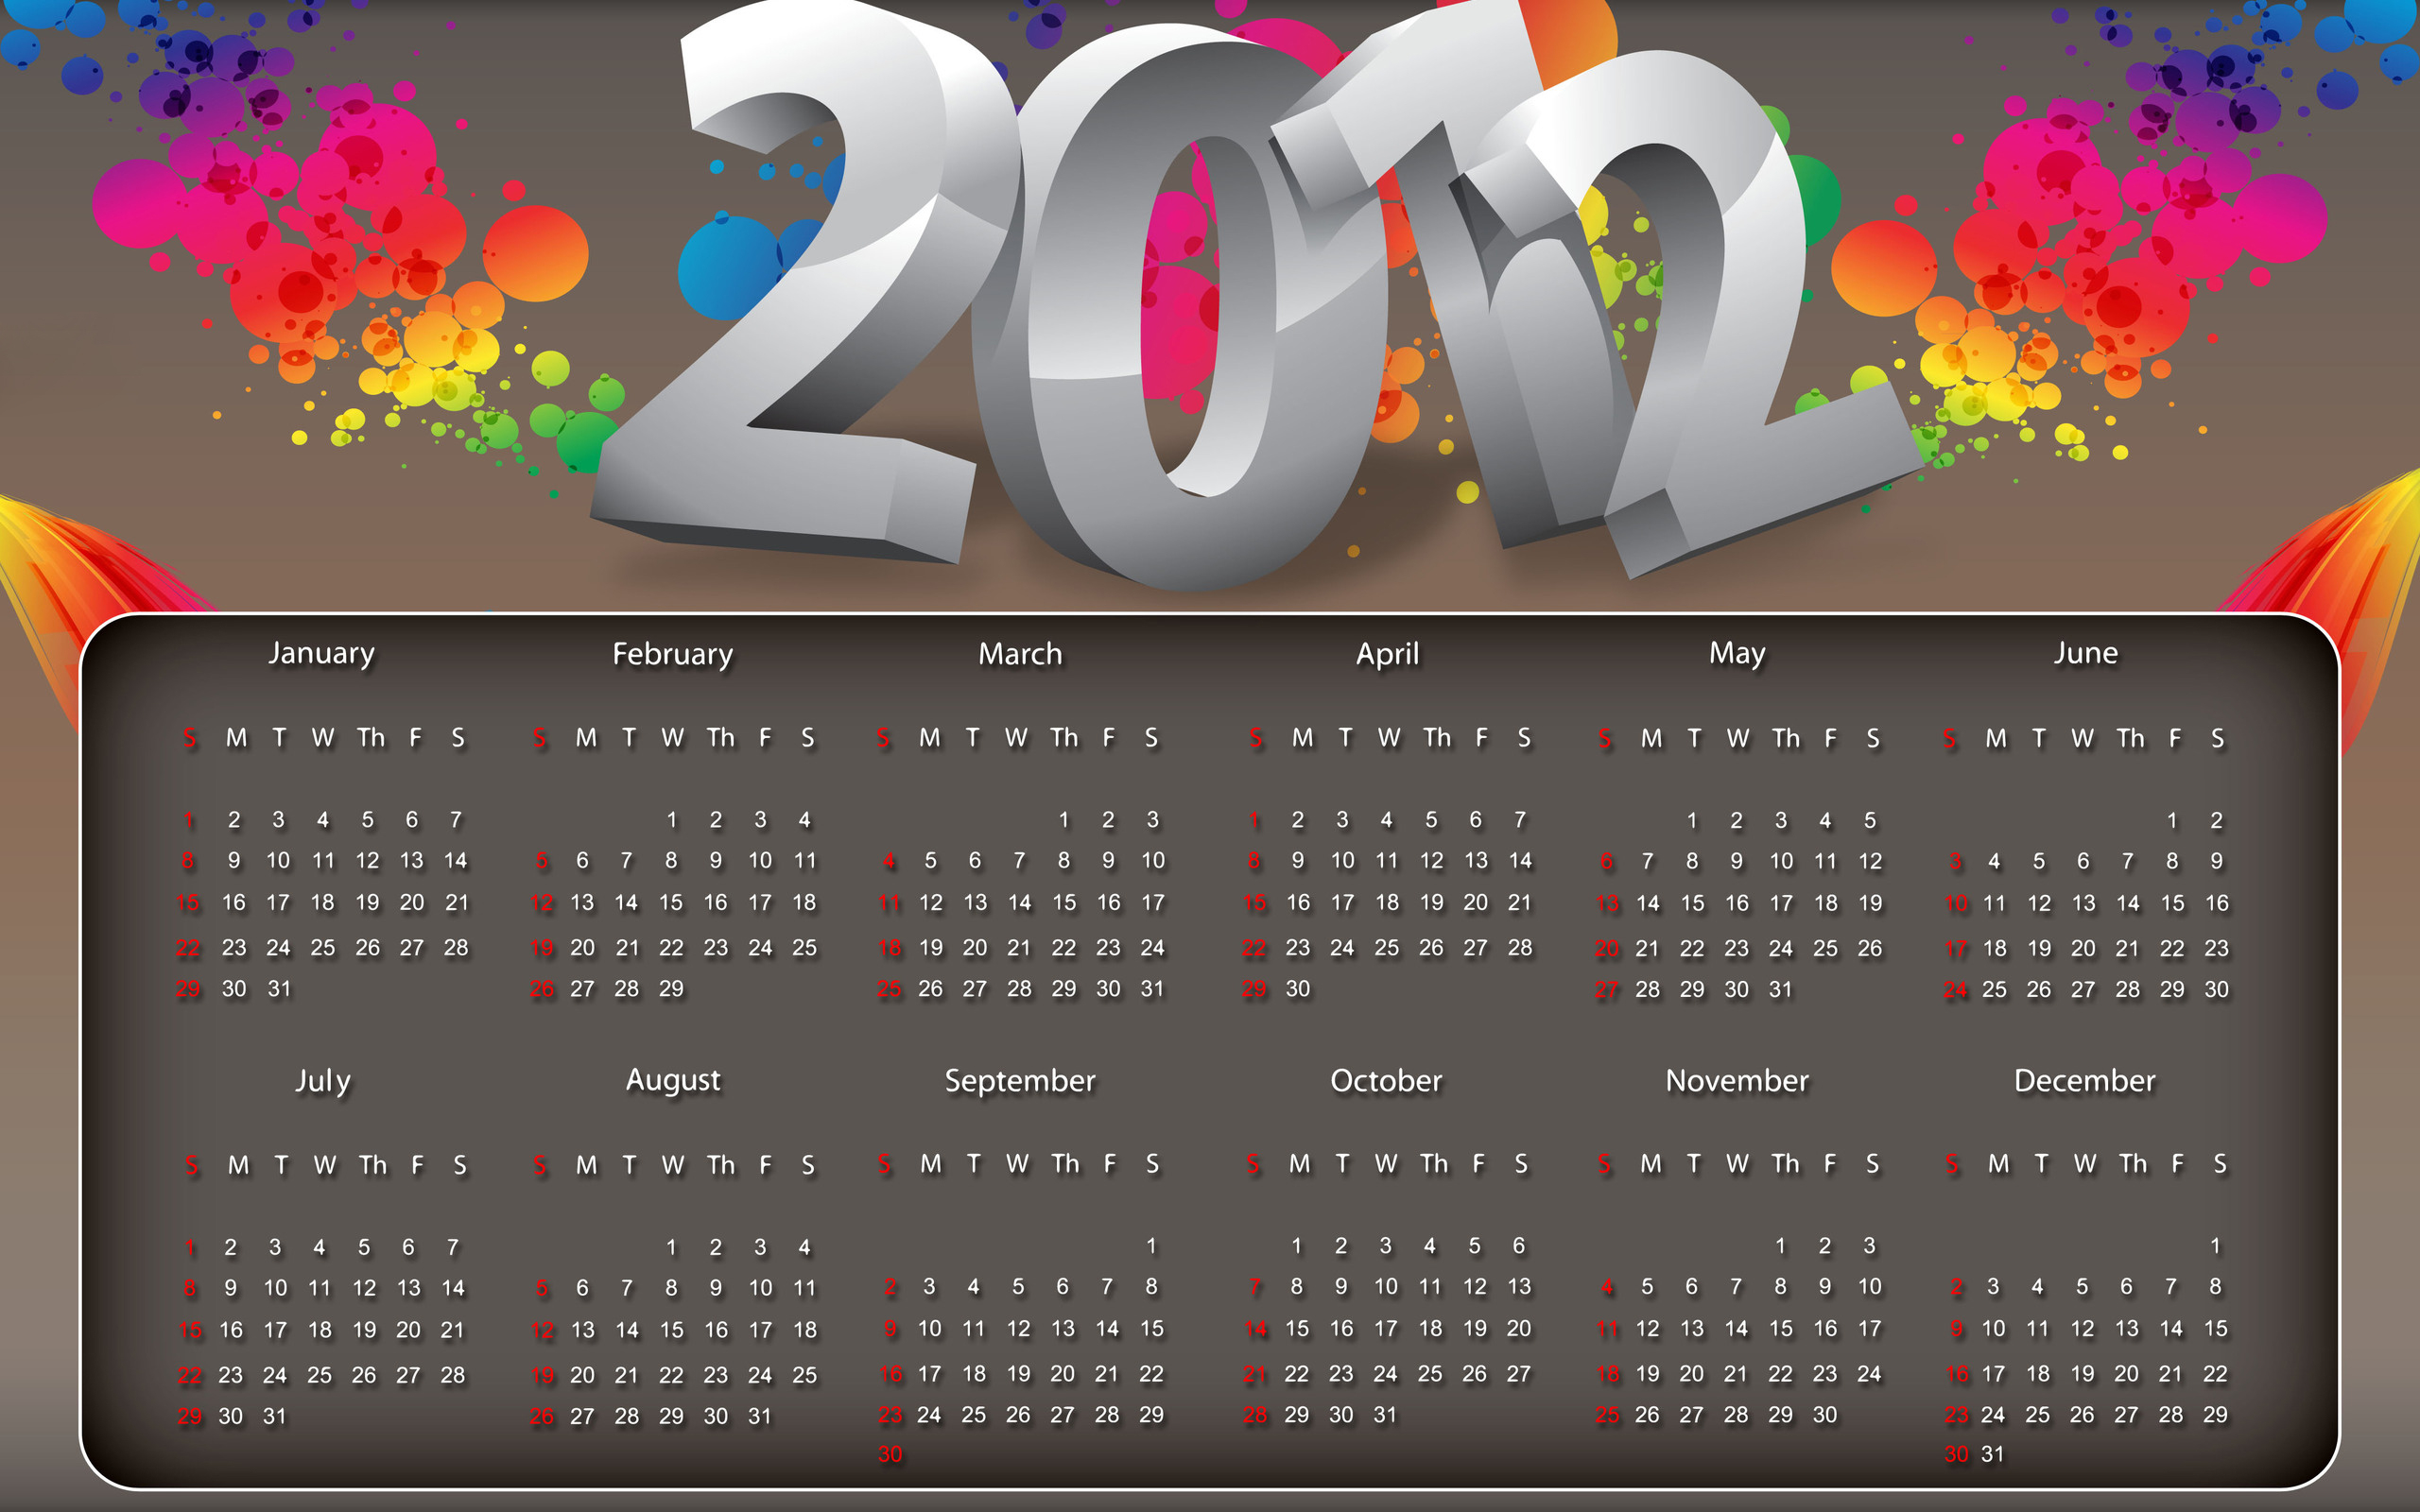 Zastaki.com - Календарь. 2012